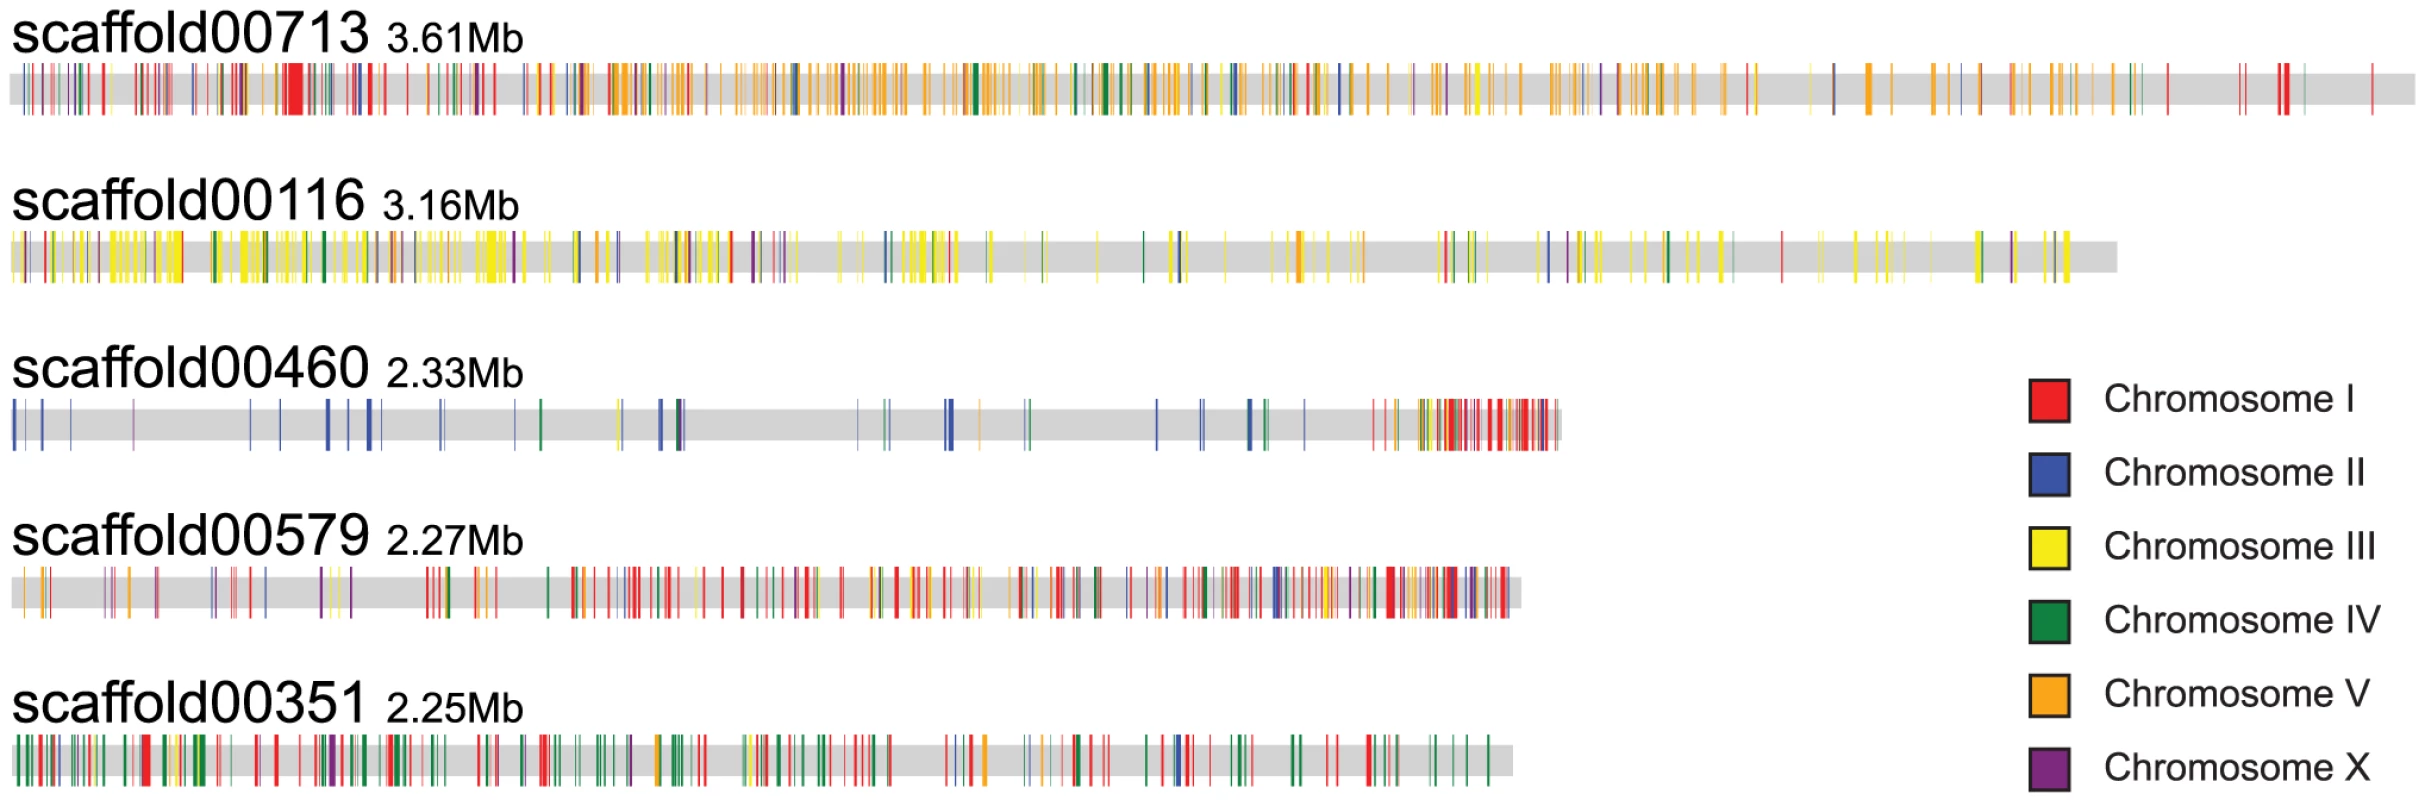 Scaffolds of <i>B. xylophilus</i> display a macrosyntenic relationship with chromosomes of <i>C. elegans</i>.